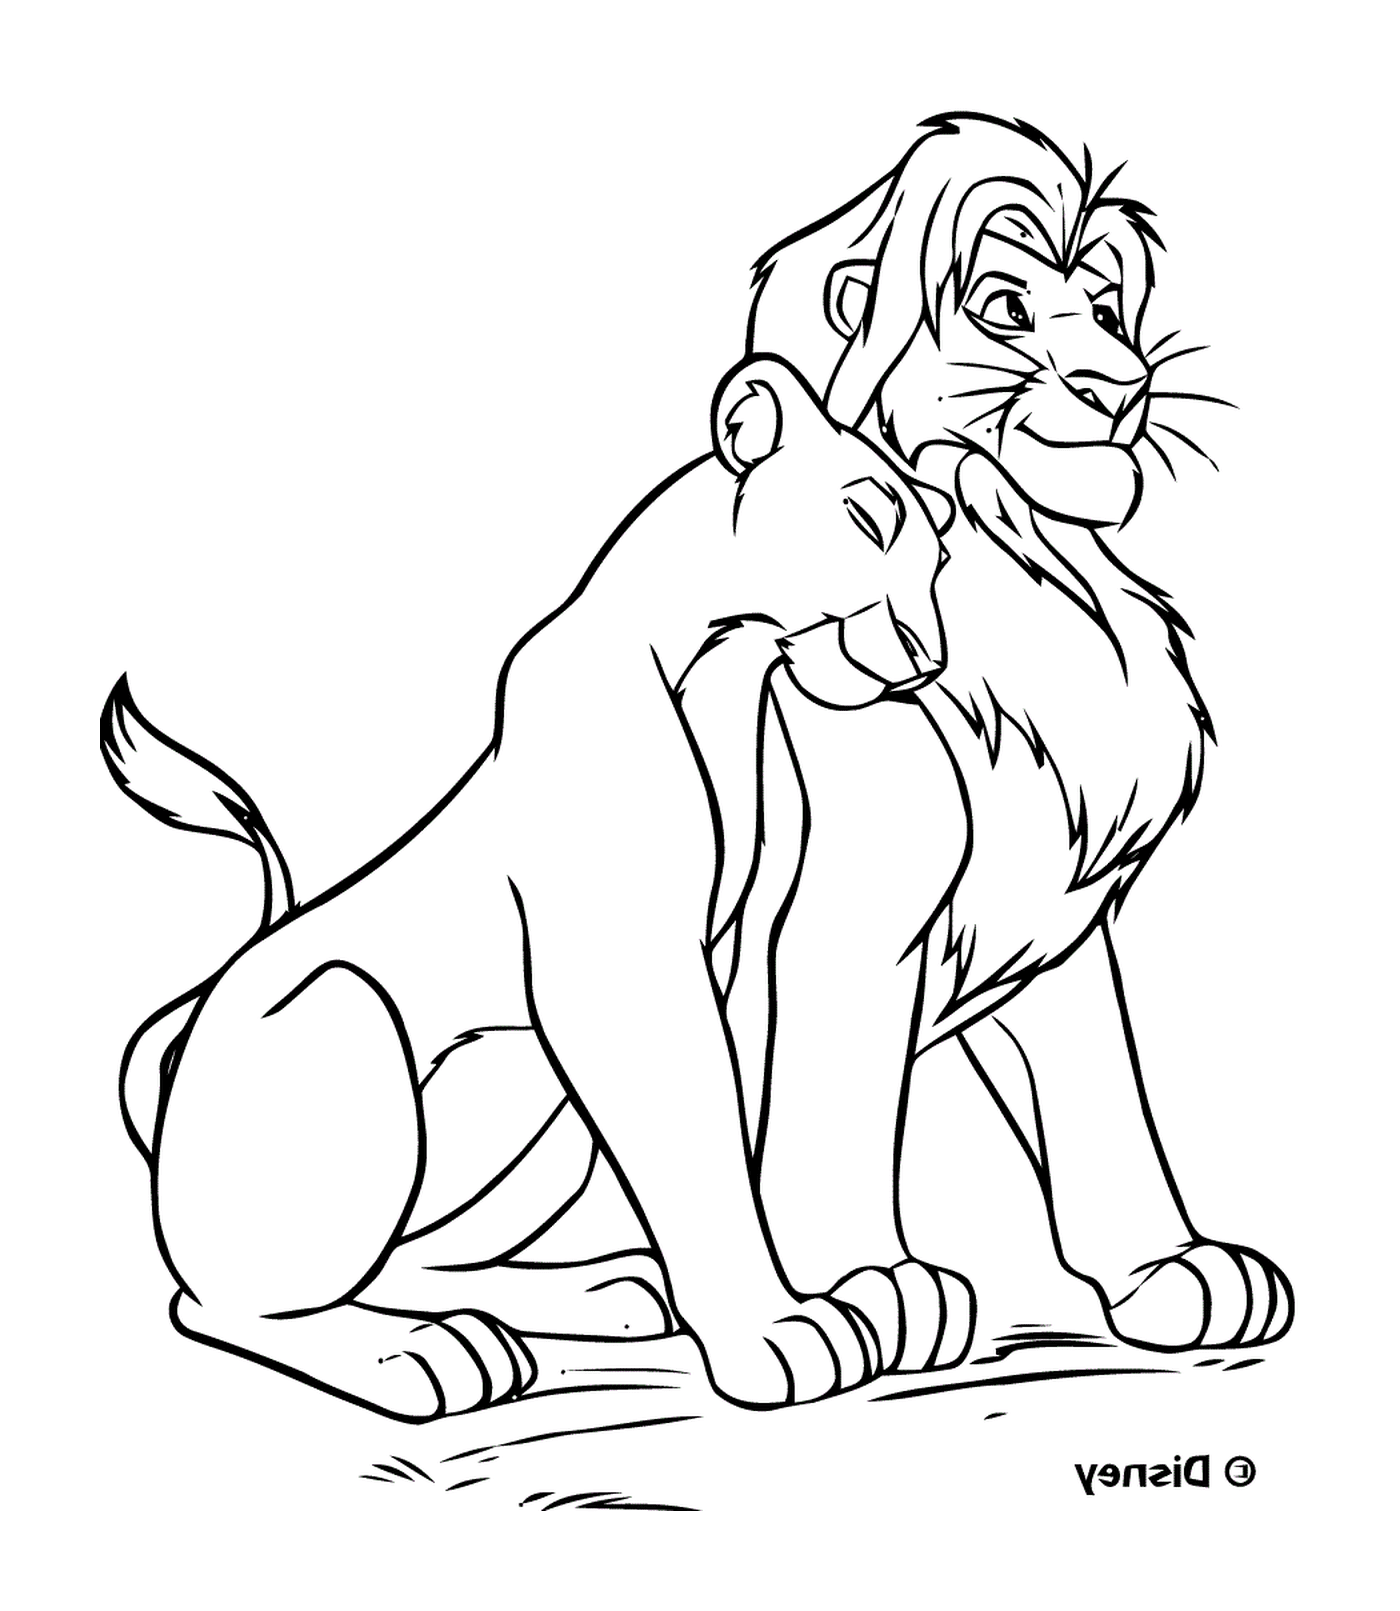  The Lion King (2019) of Disney 